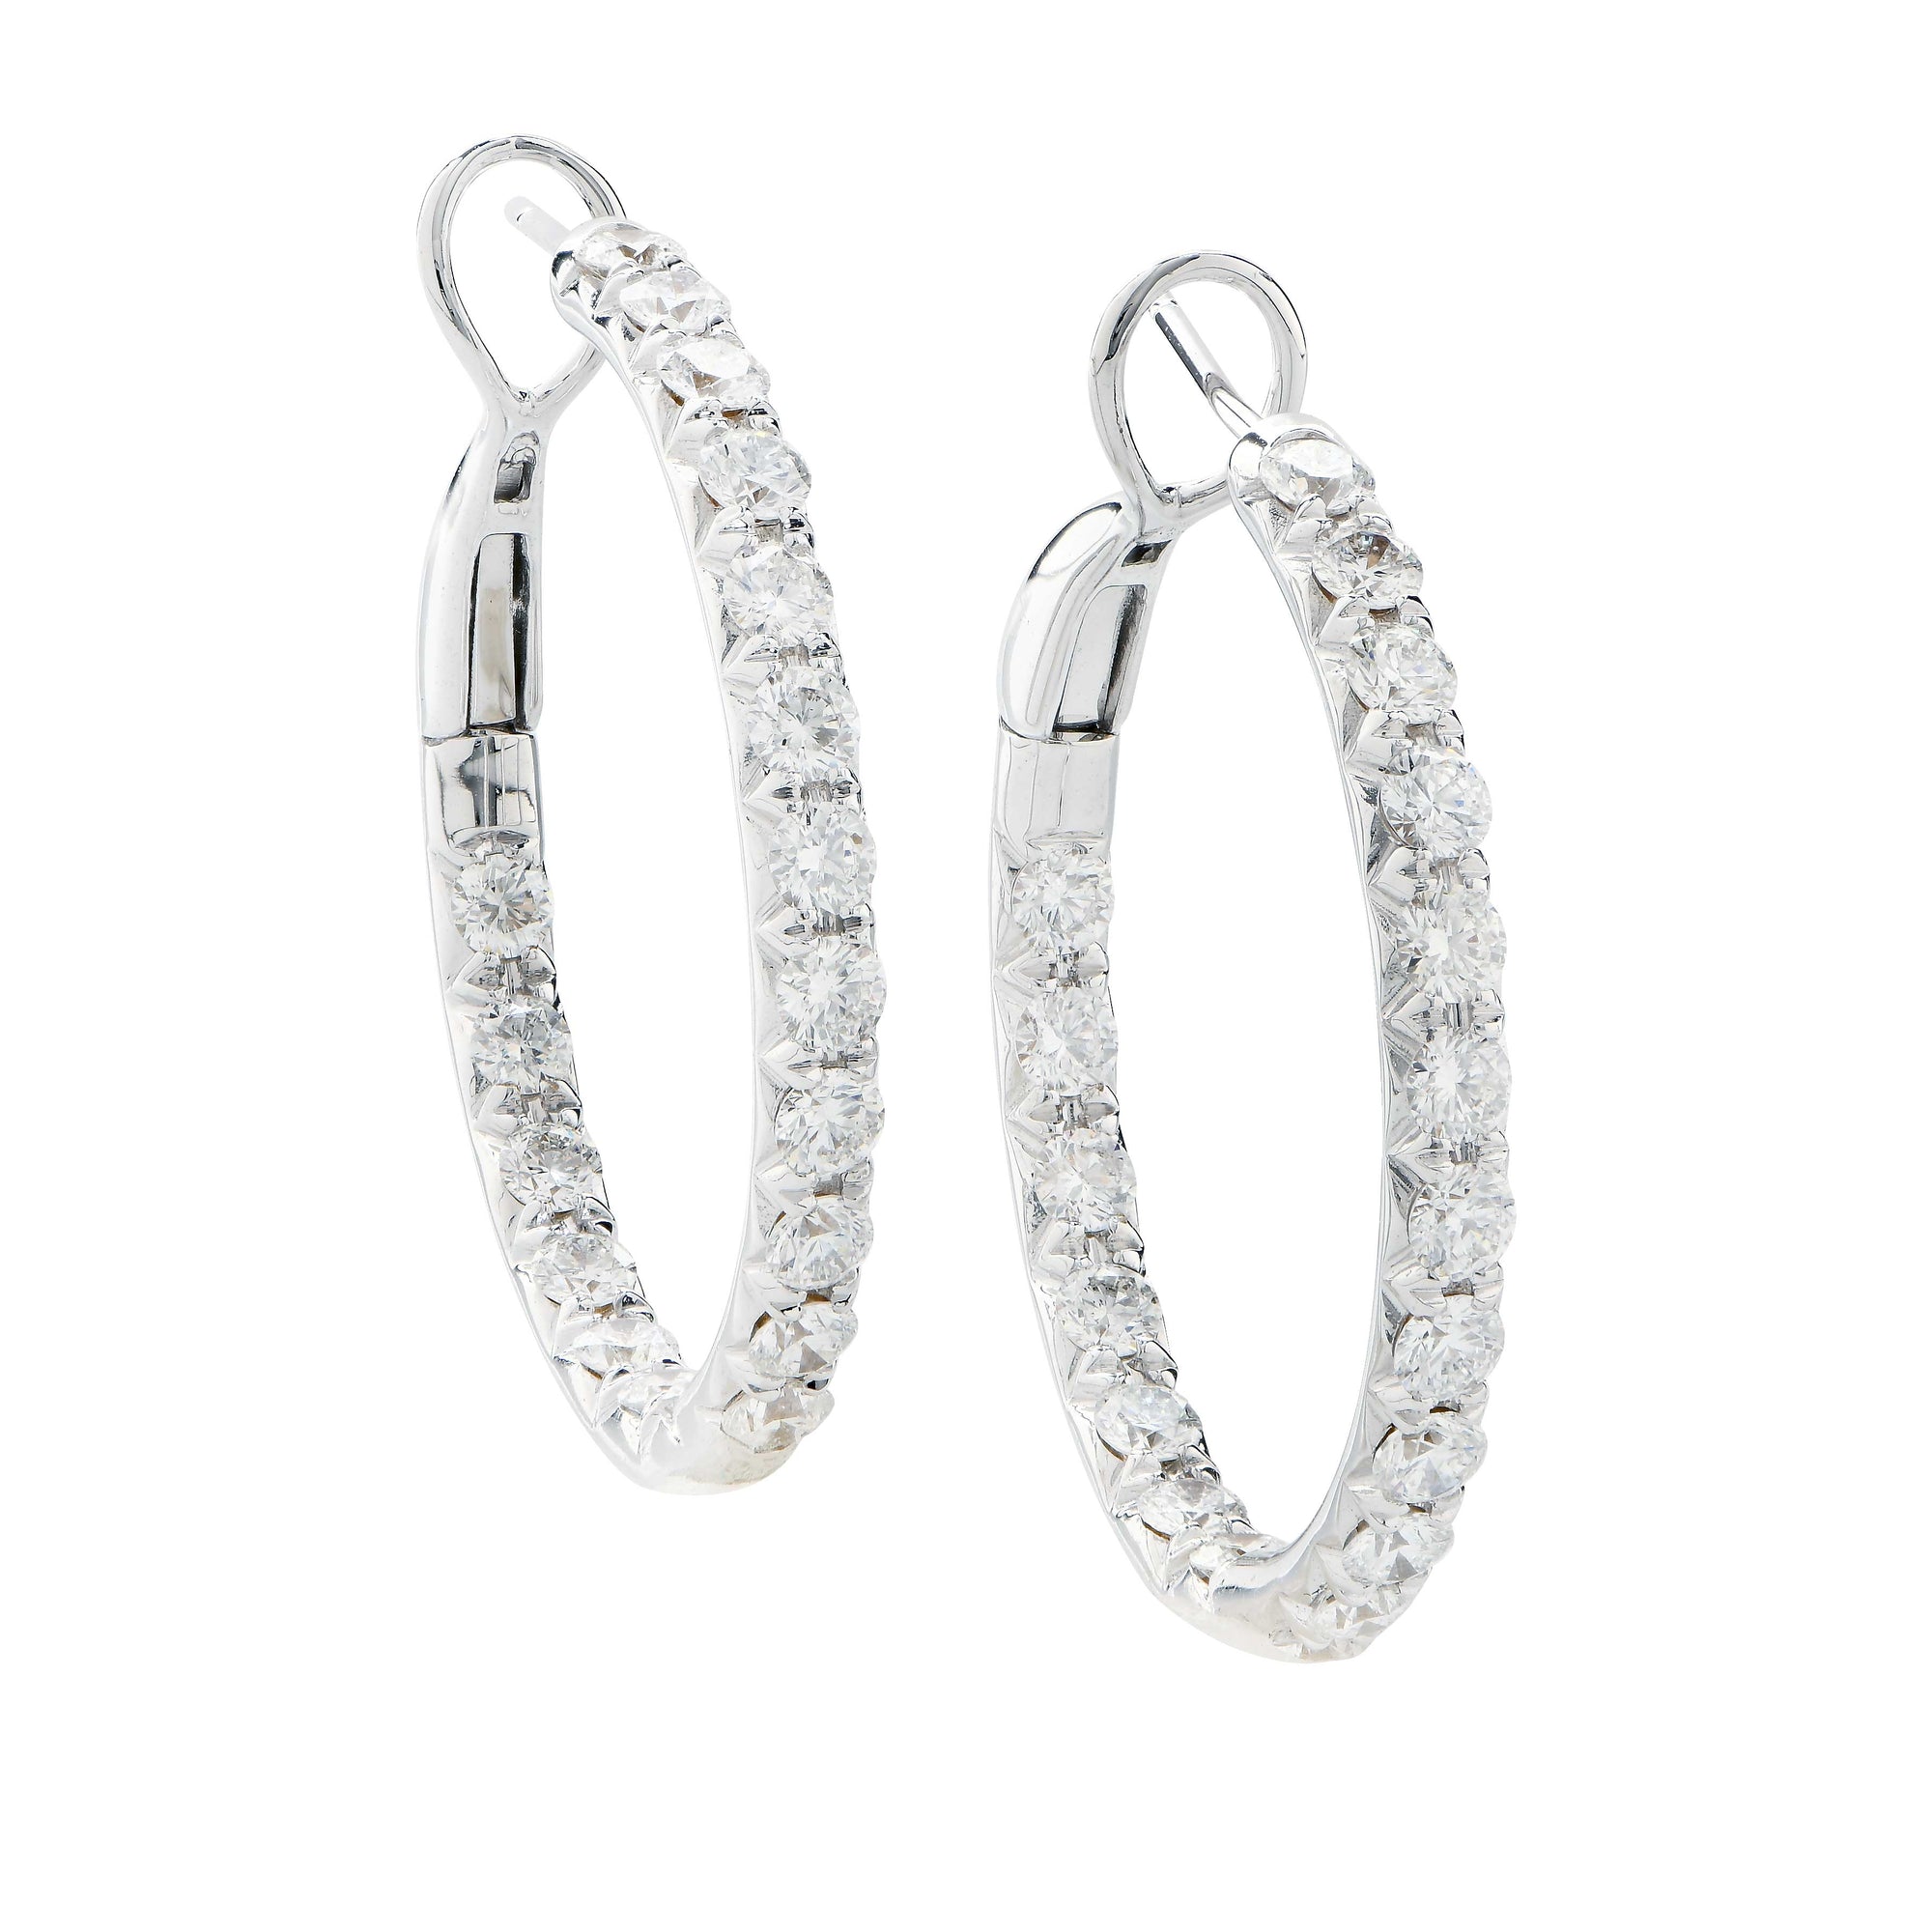 2.64 Carat Diamond Hoop Earrings in 18 Karat White Gold